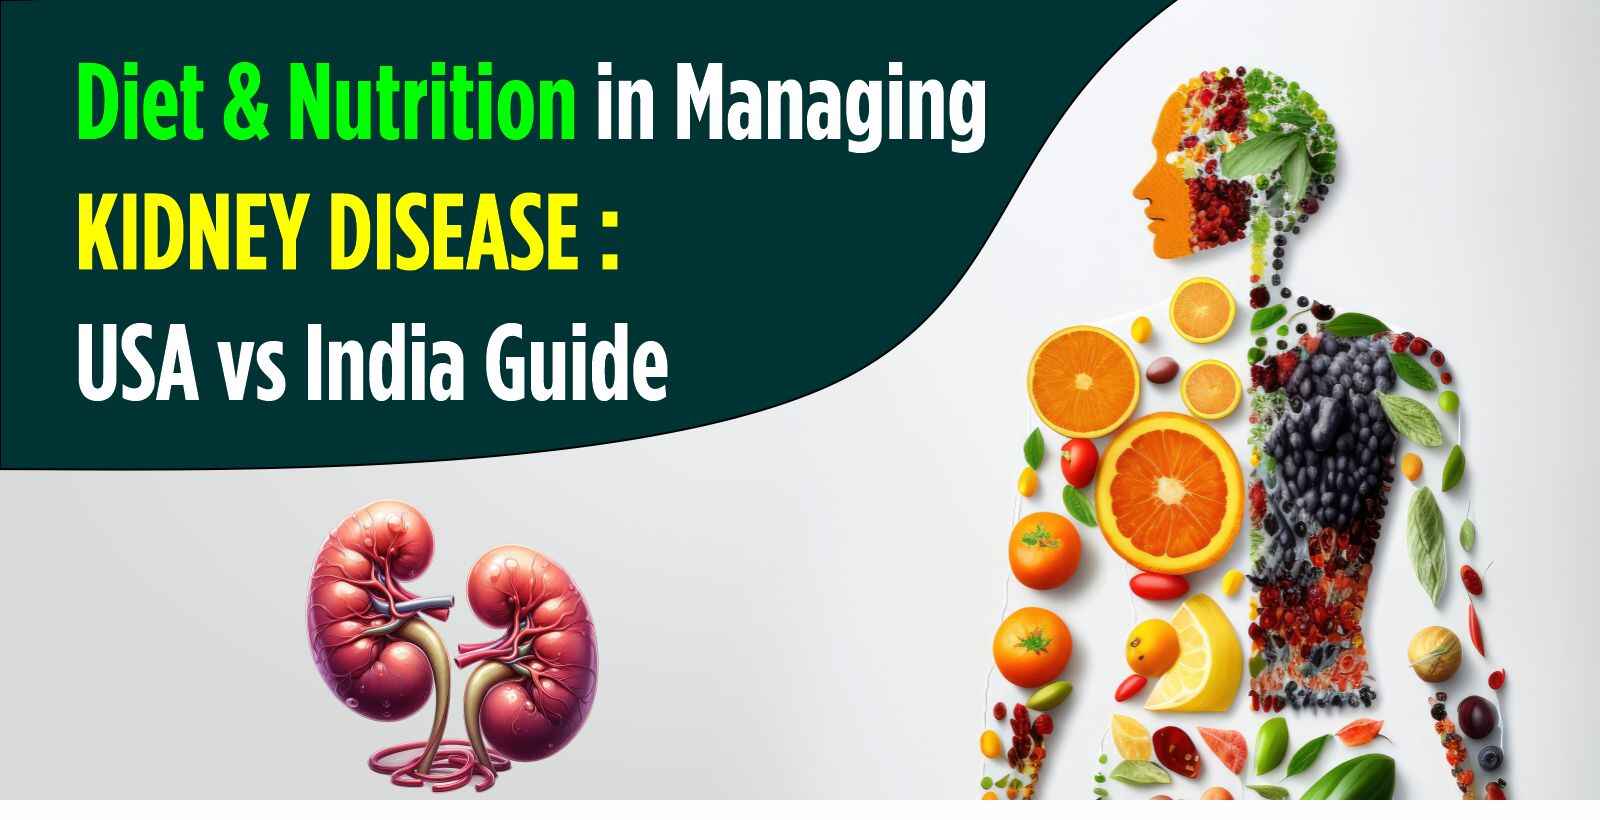 Diet & Nutrition in Managing Kidney Disease: USA vs India Guide